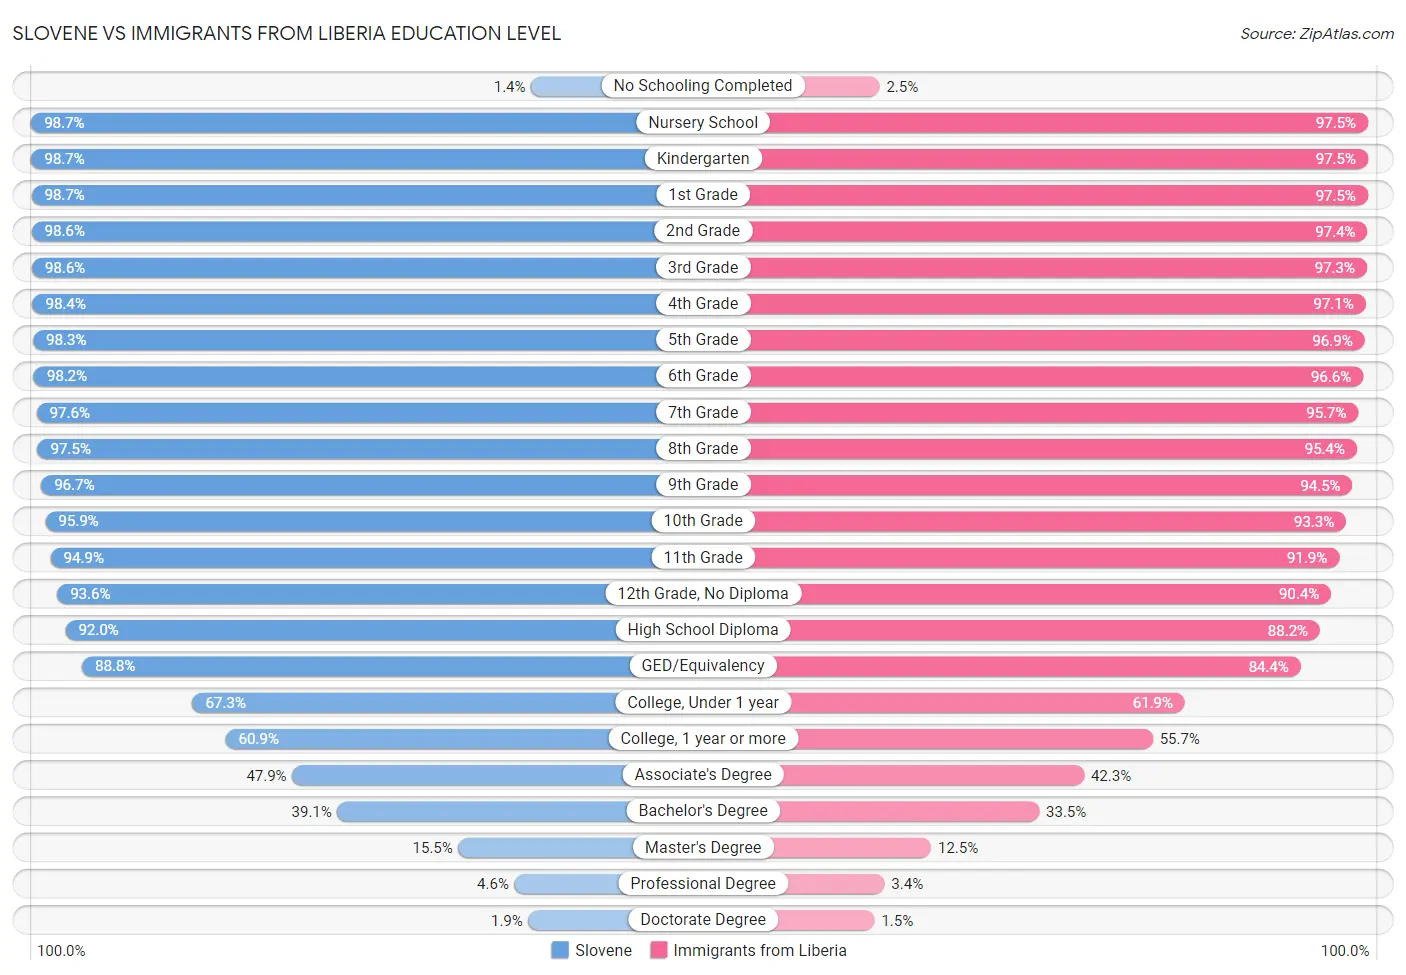 Slovene vs Immigrants from Liberia Education Level